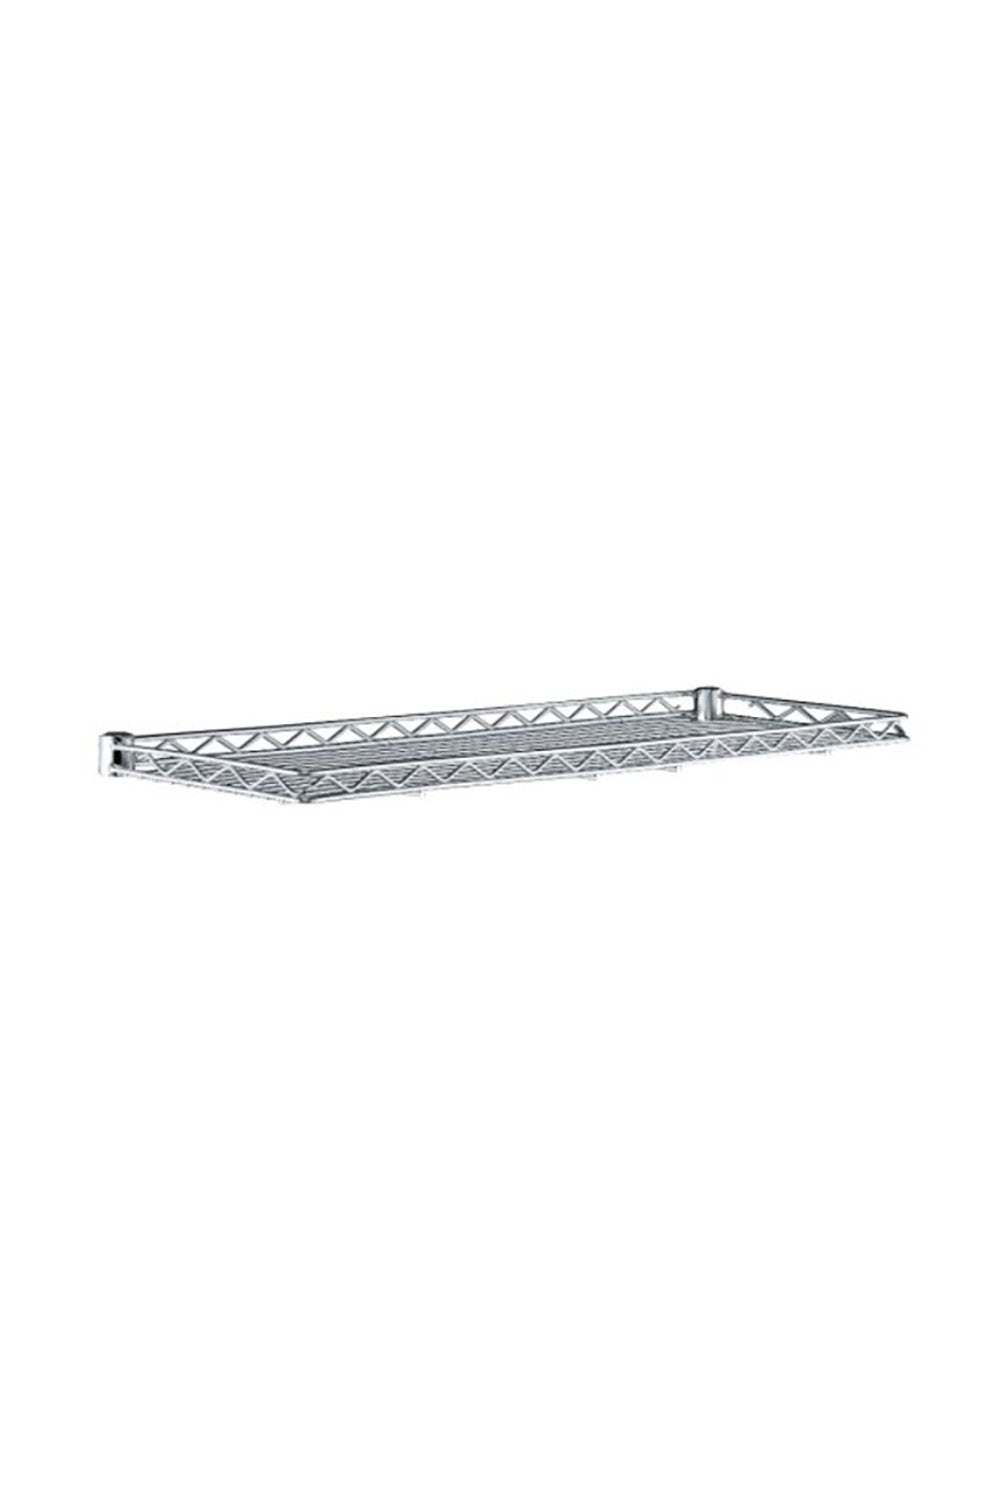 Shelf, Cantilevered Open Storage Metro 12" x 30" x 1.5" 150 lbs 